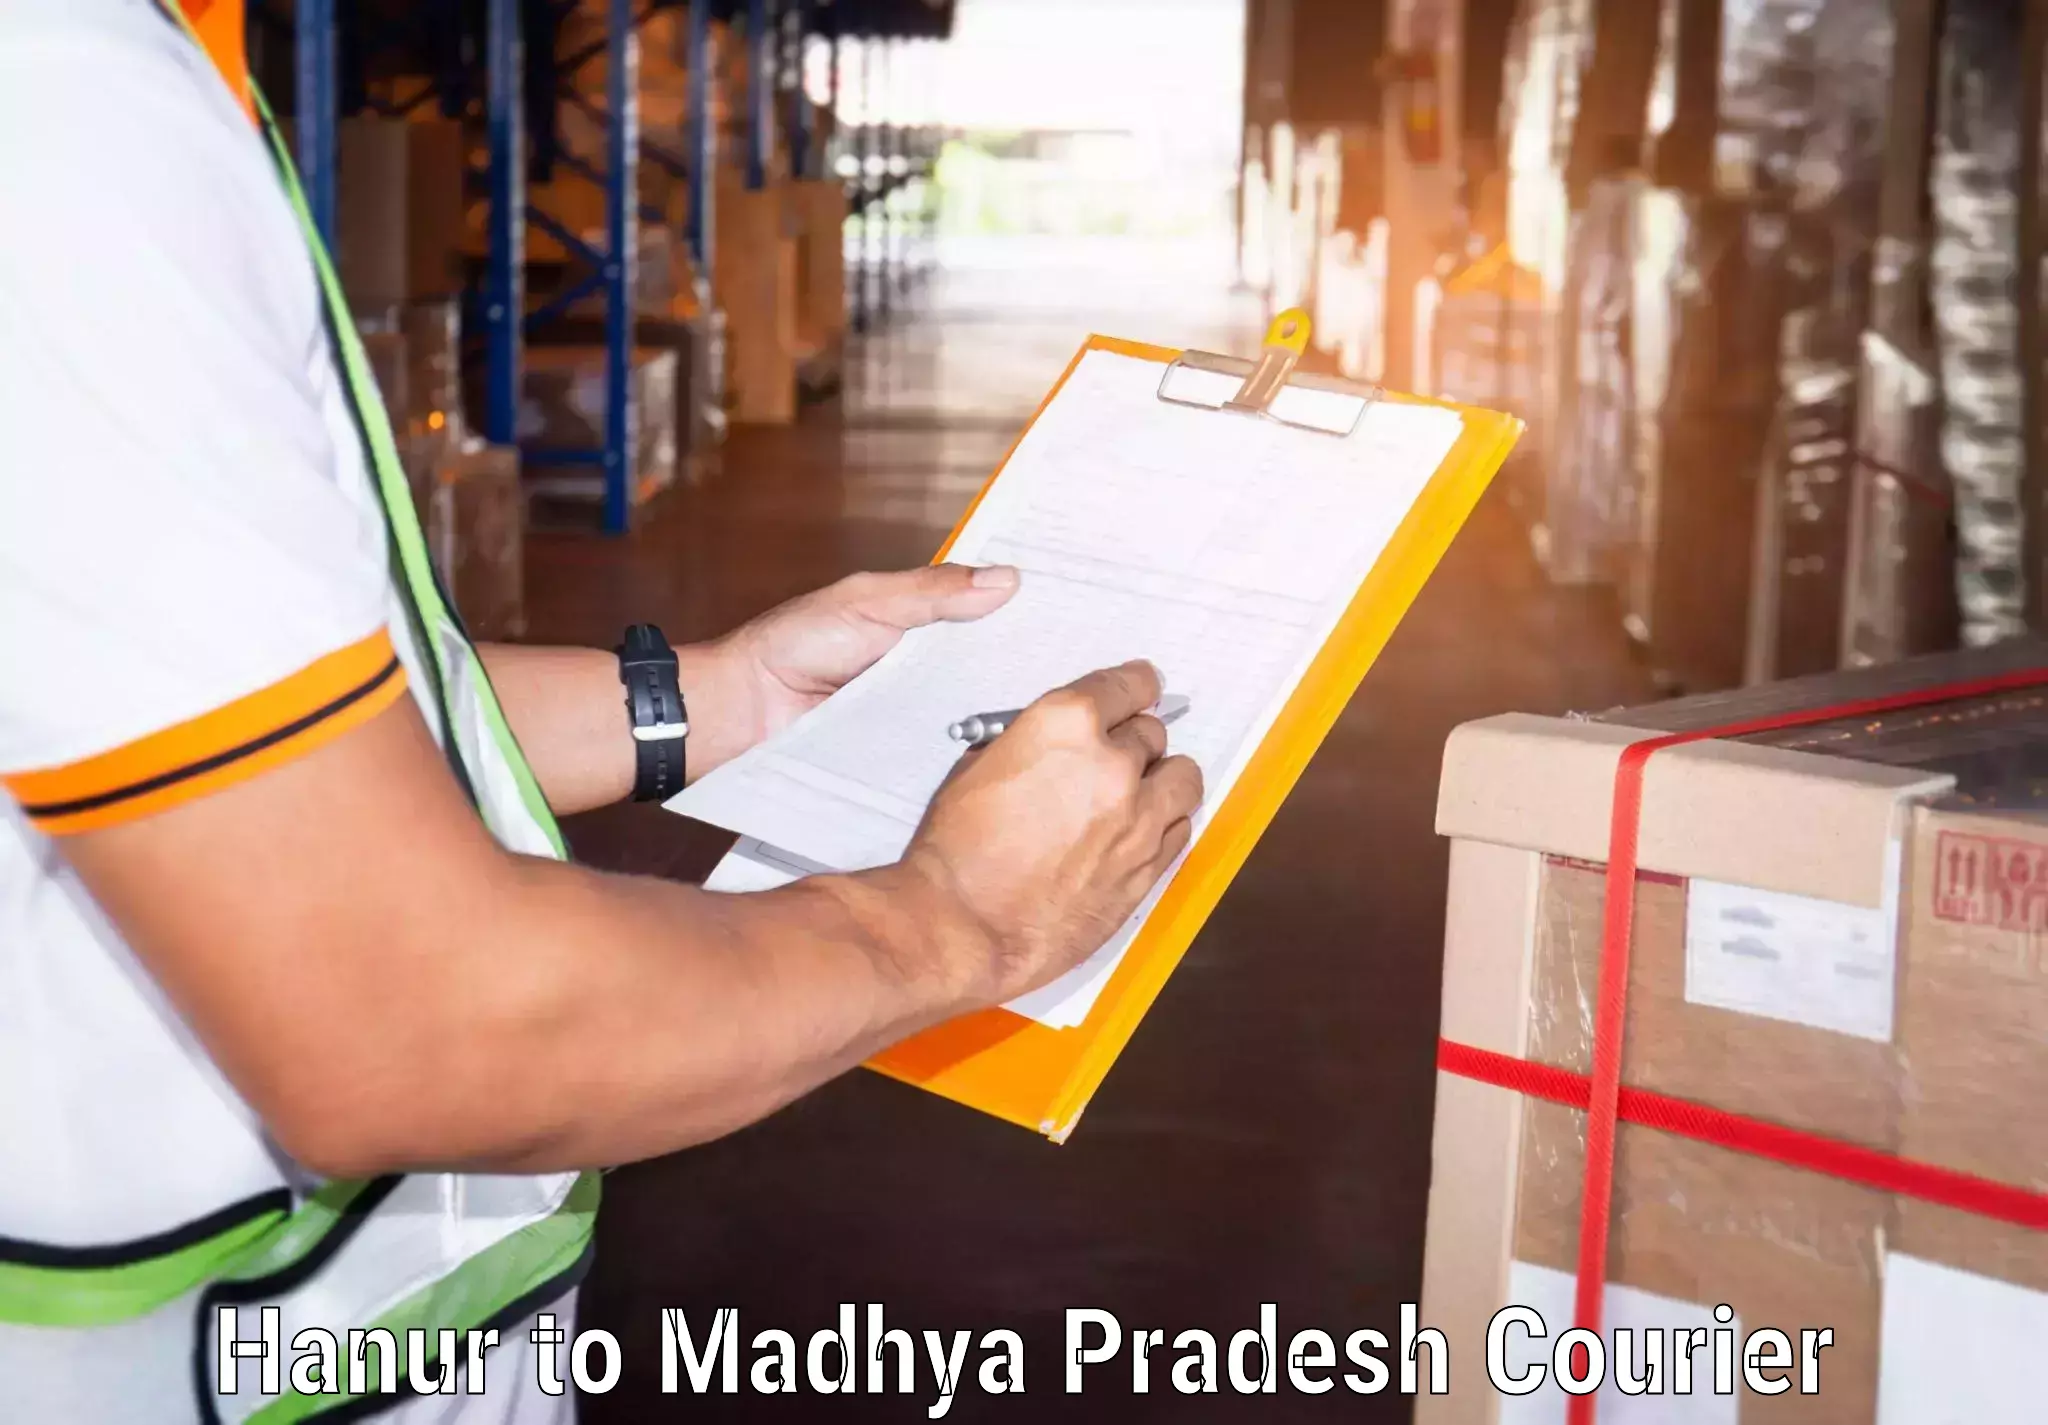 Express courier capabilities Hanur to Mandideep